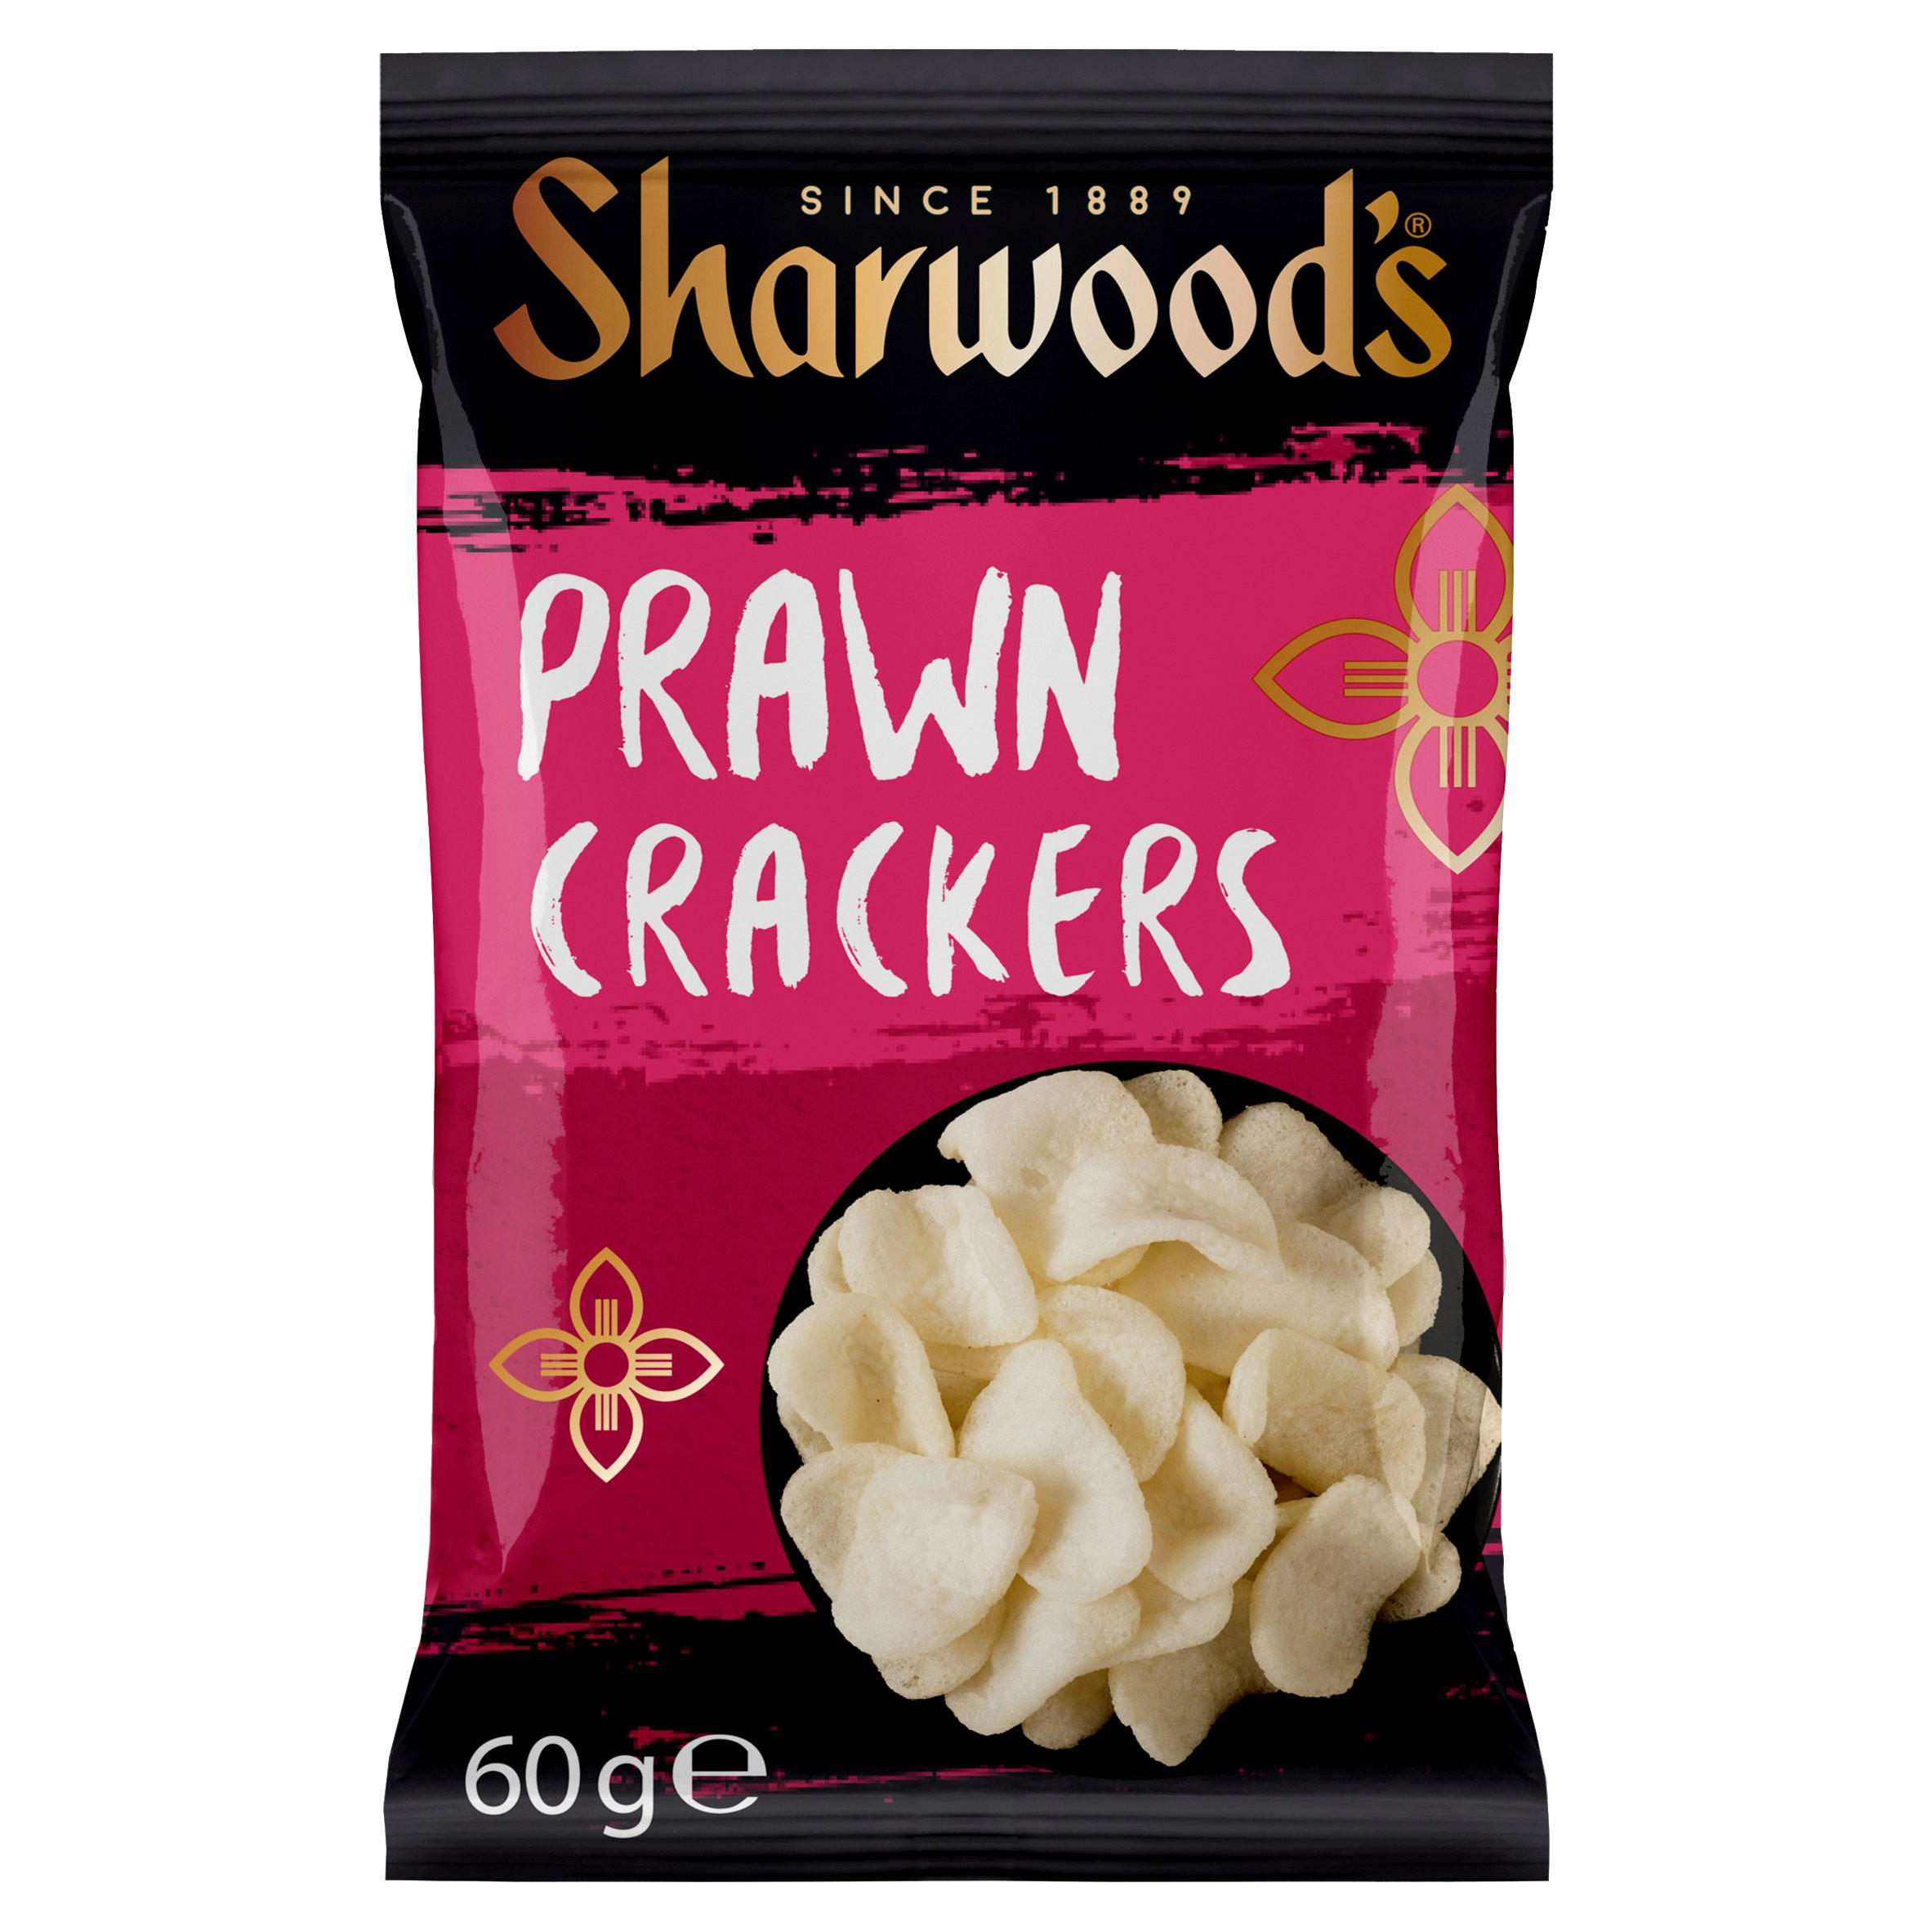 Sharwood's Prawn Crackers 60g, Sharing Crisps